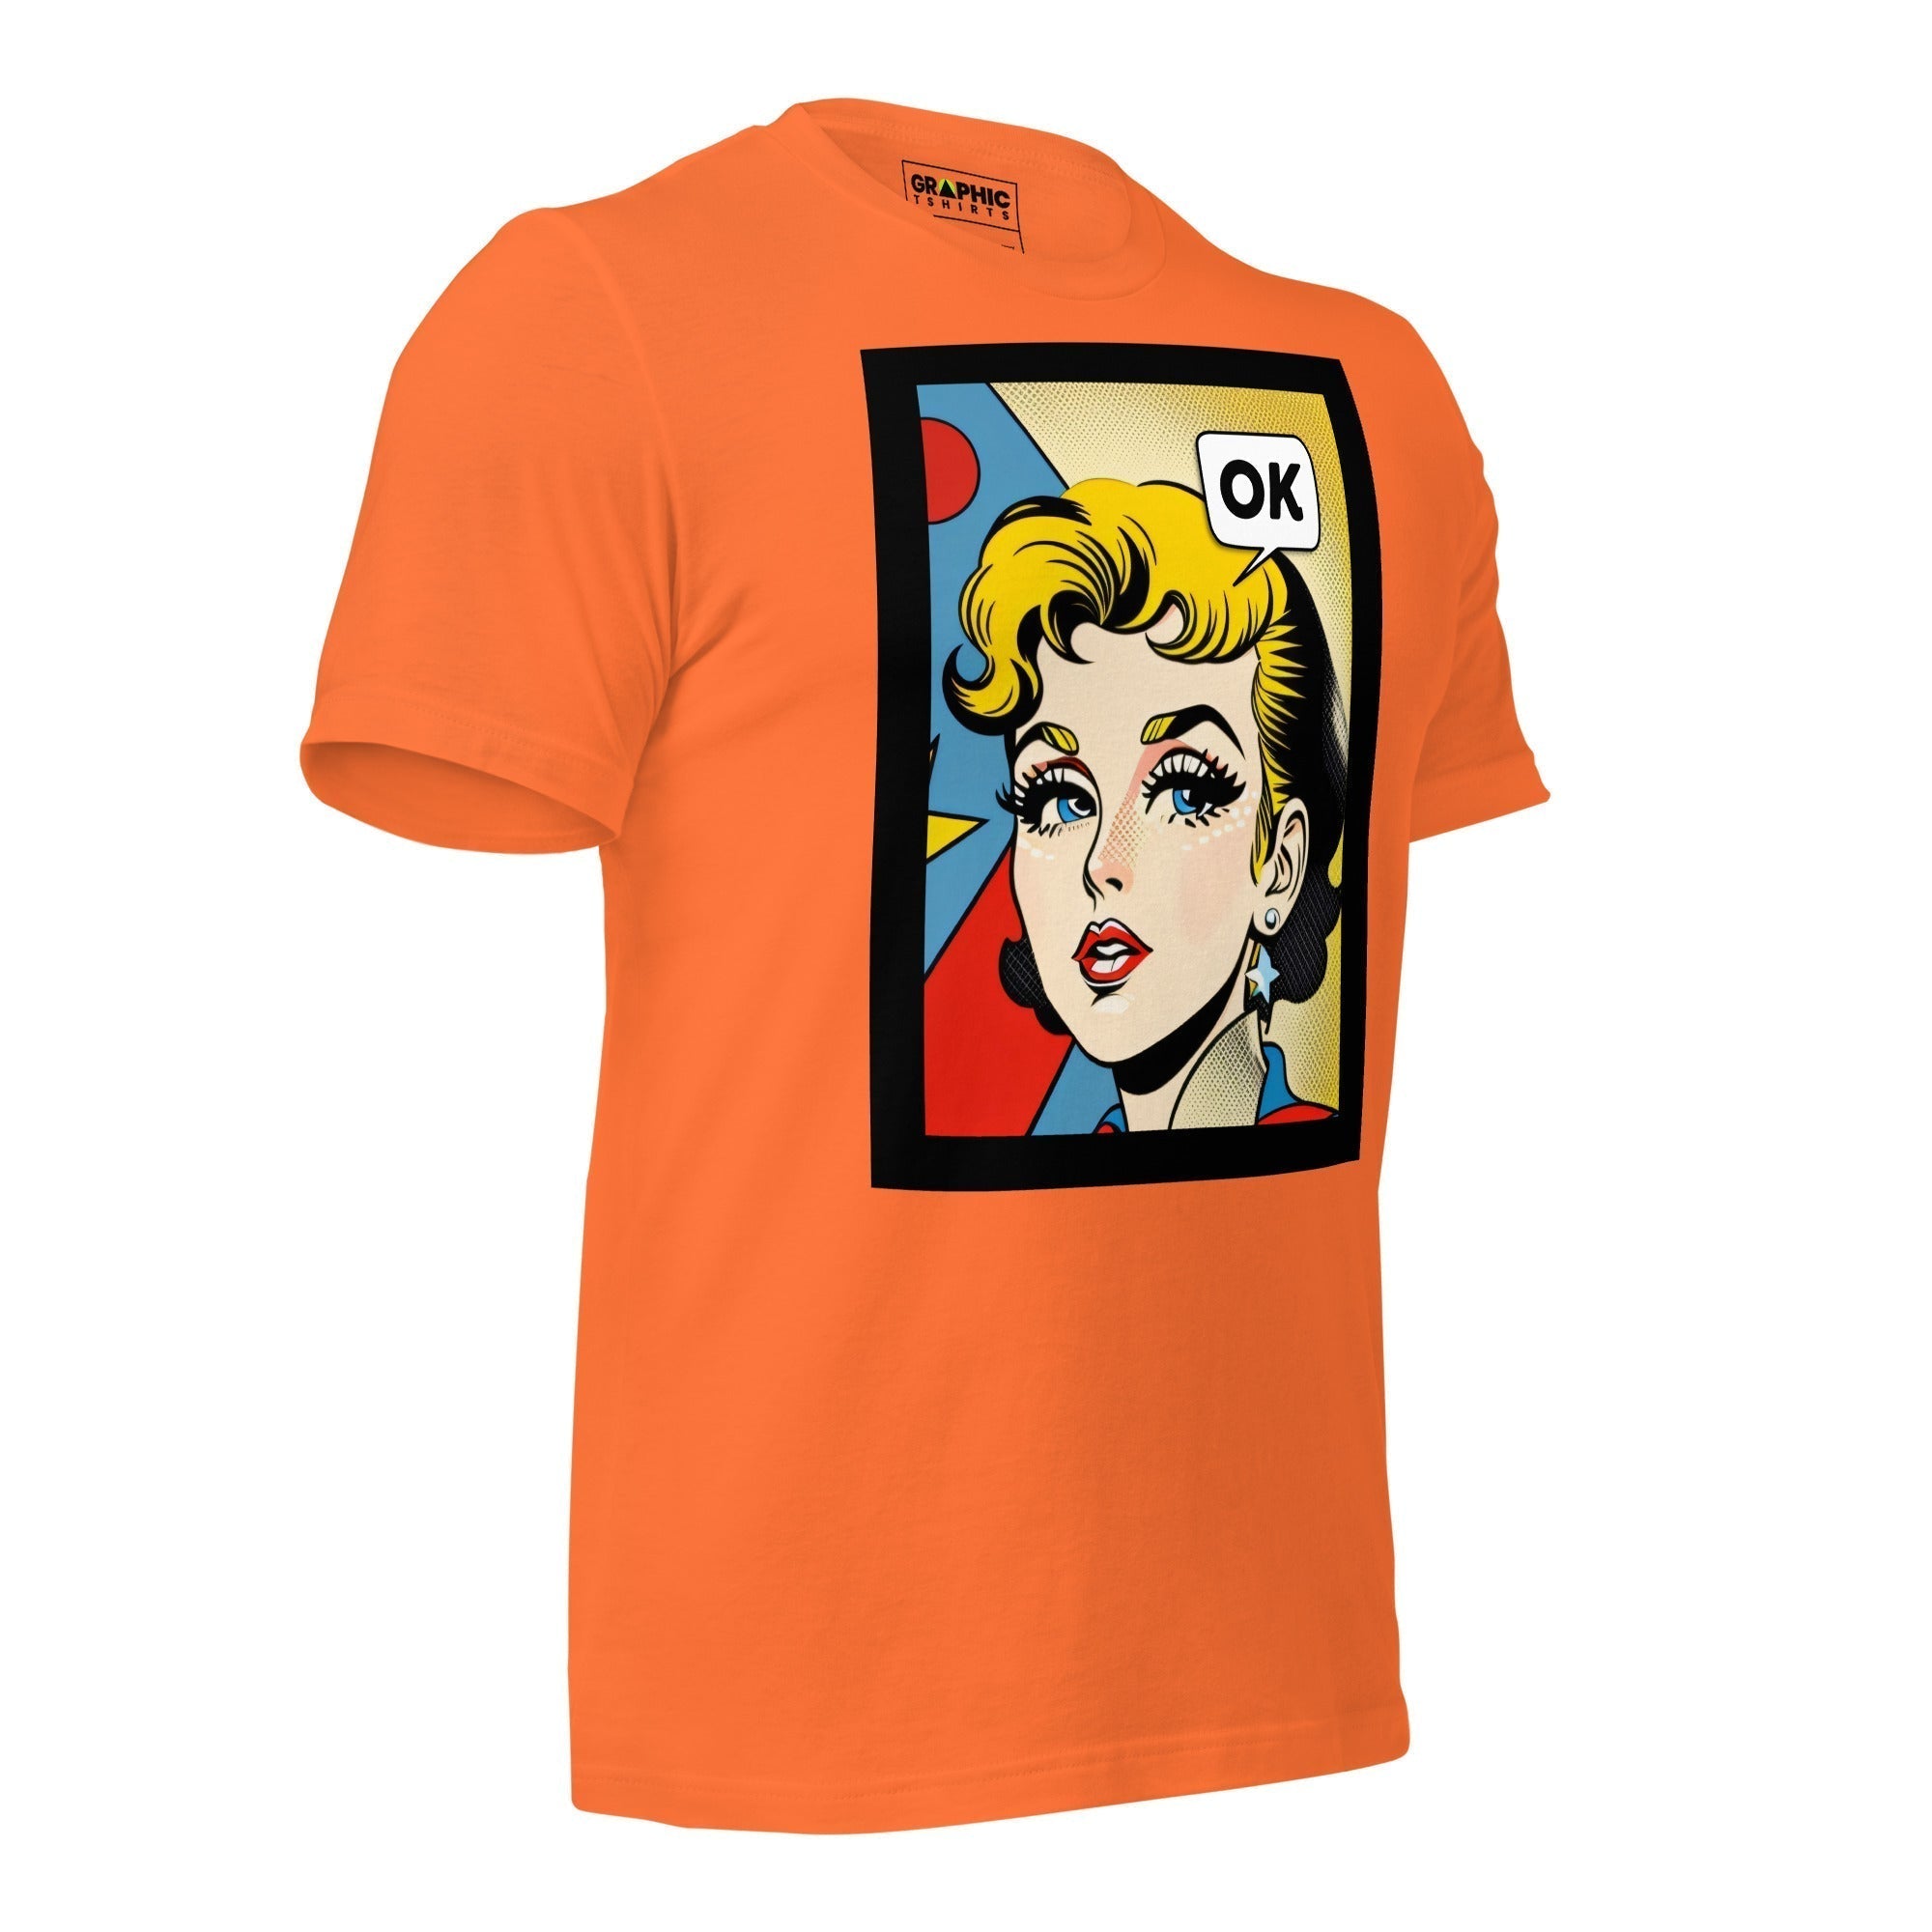 Unisex Crew Neck T-Shirt - Vintage American Comic Series v.14 - GRAPHIC T-SHIRTS